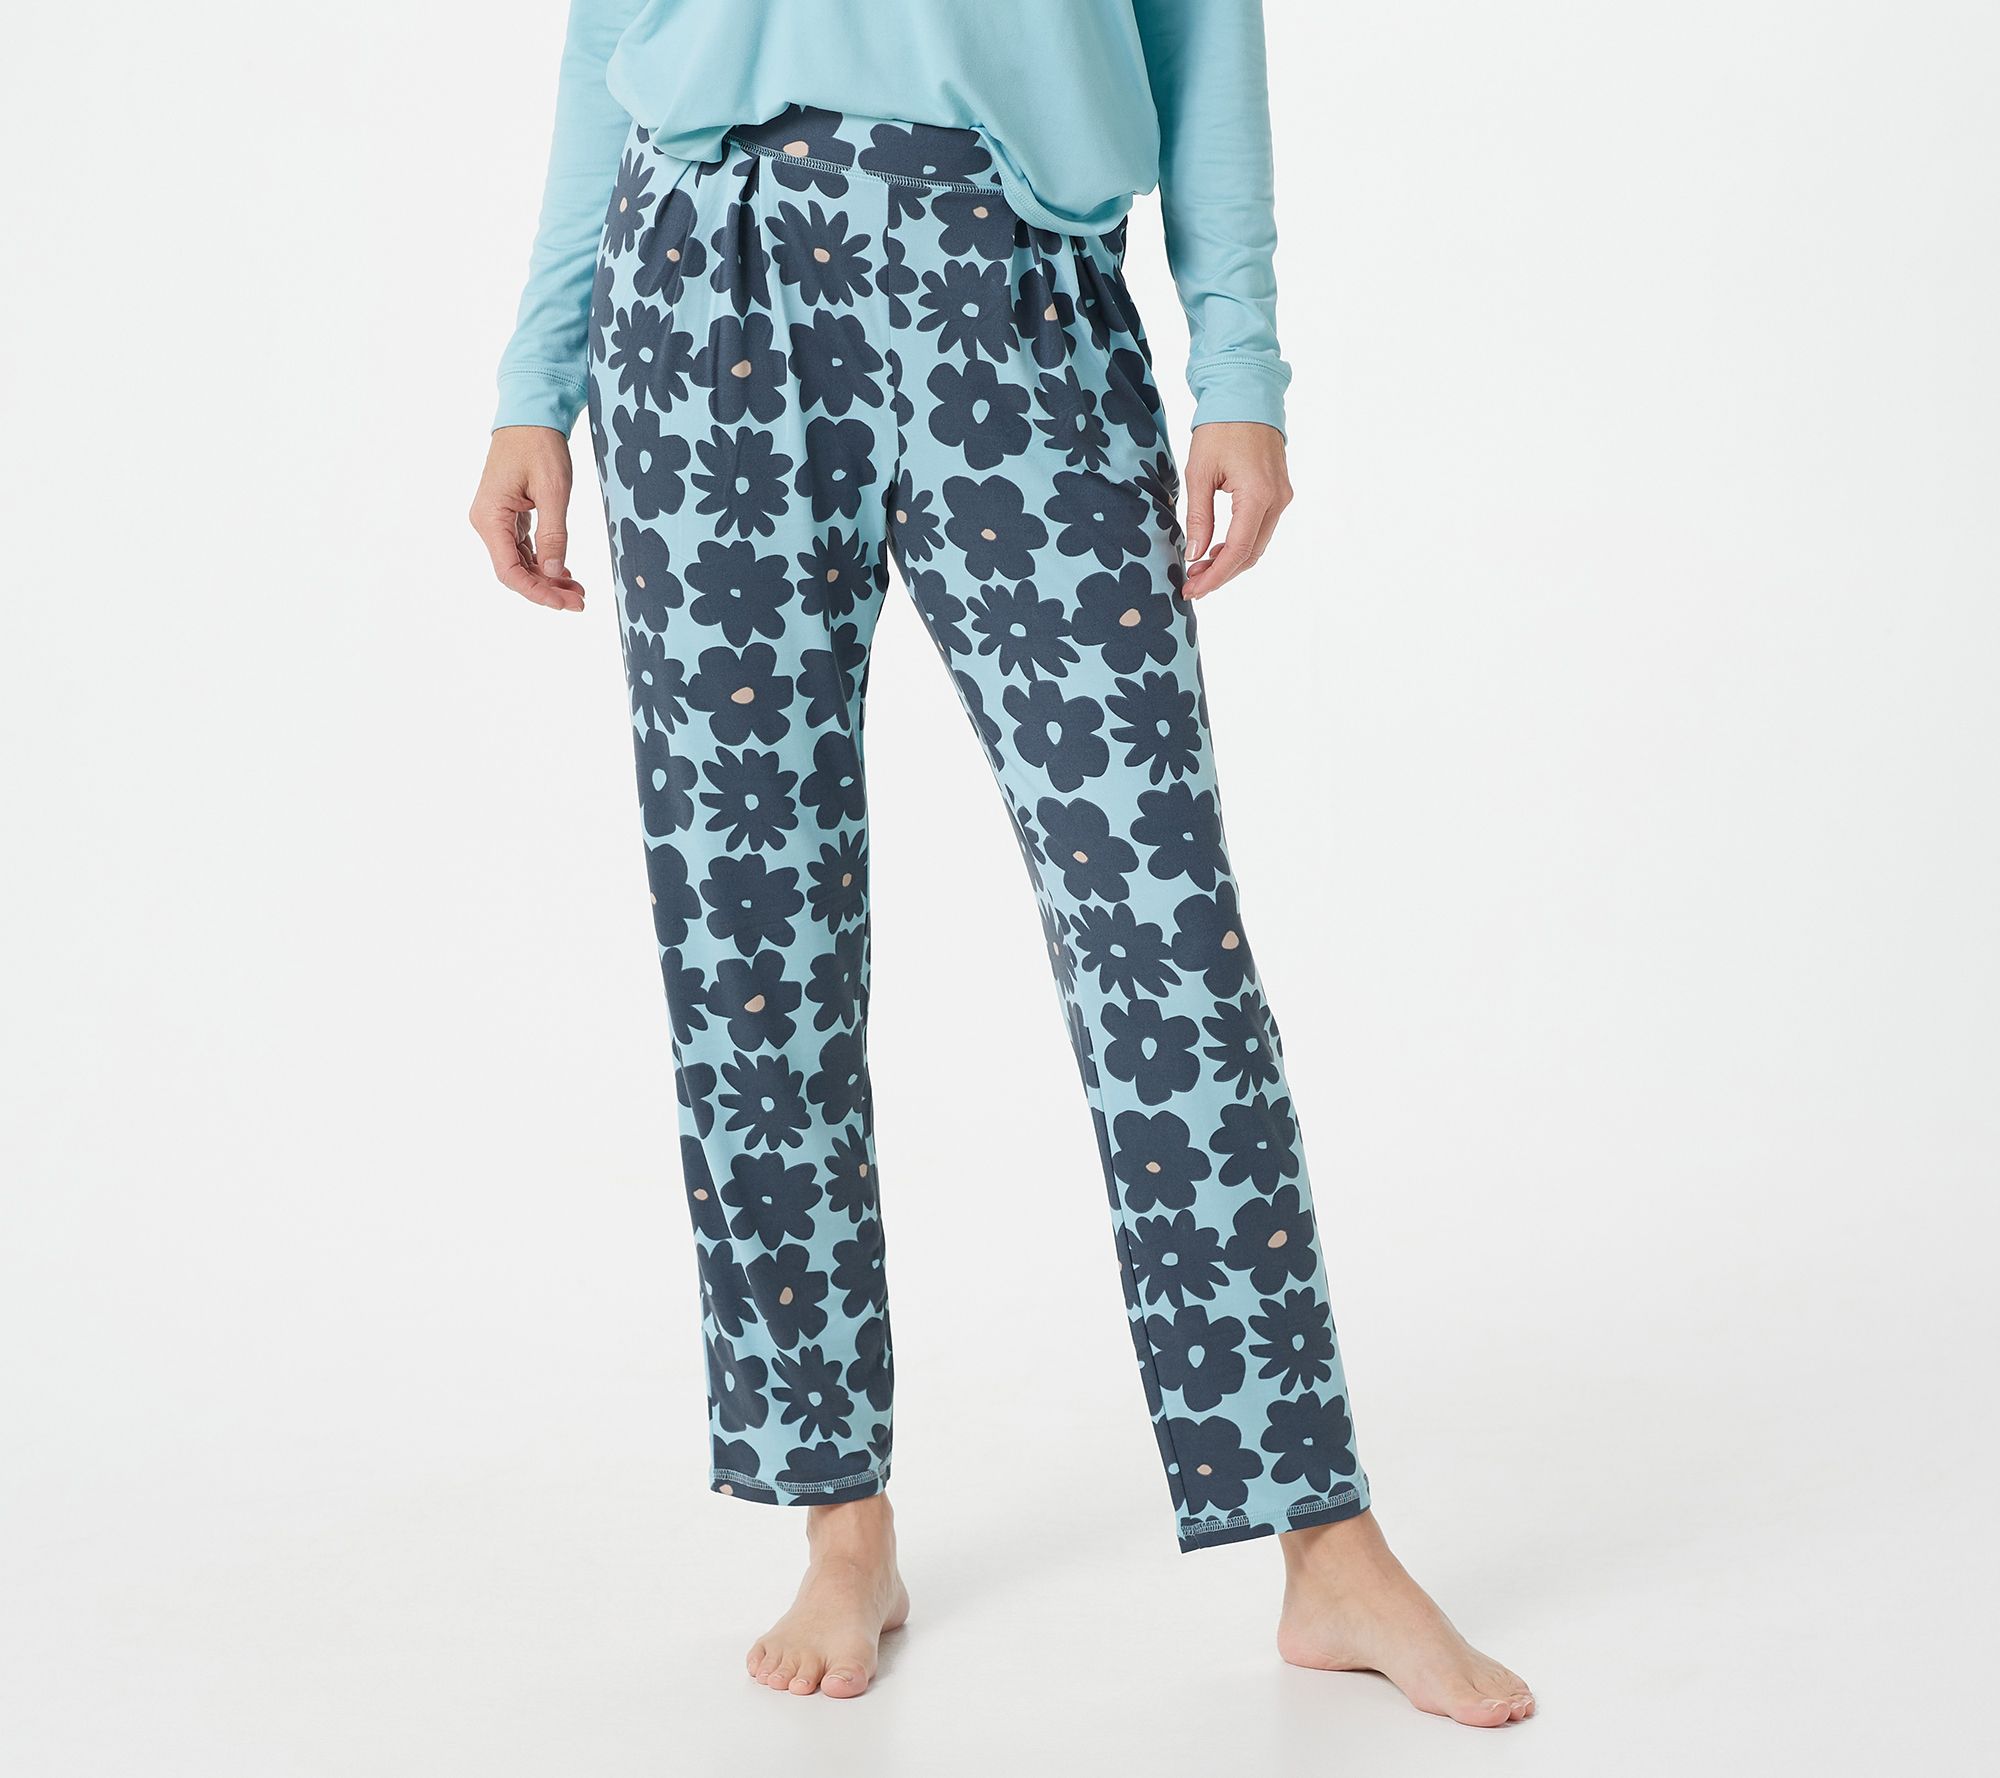 AnyBody Petite Brushed Jersey Printed Long Sleeve Pajama Set - QVC.com